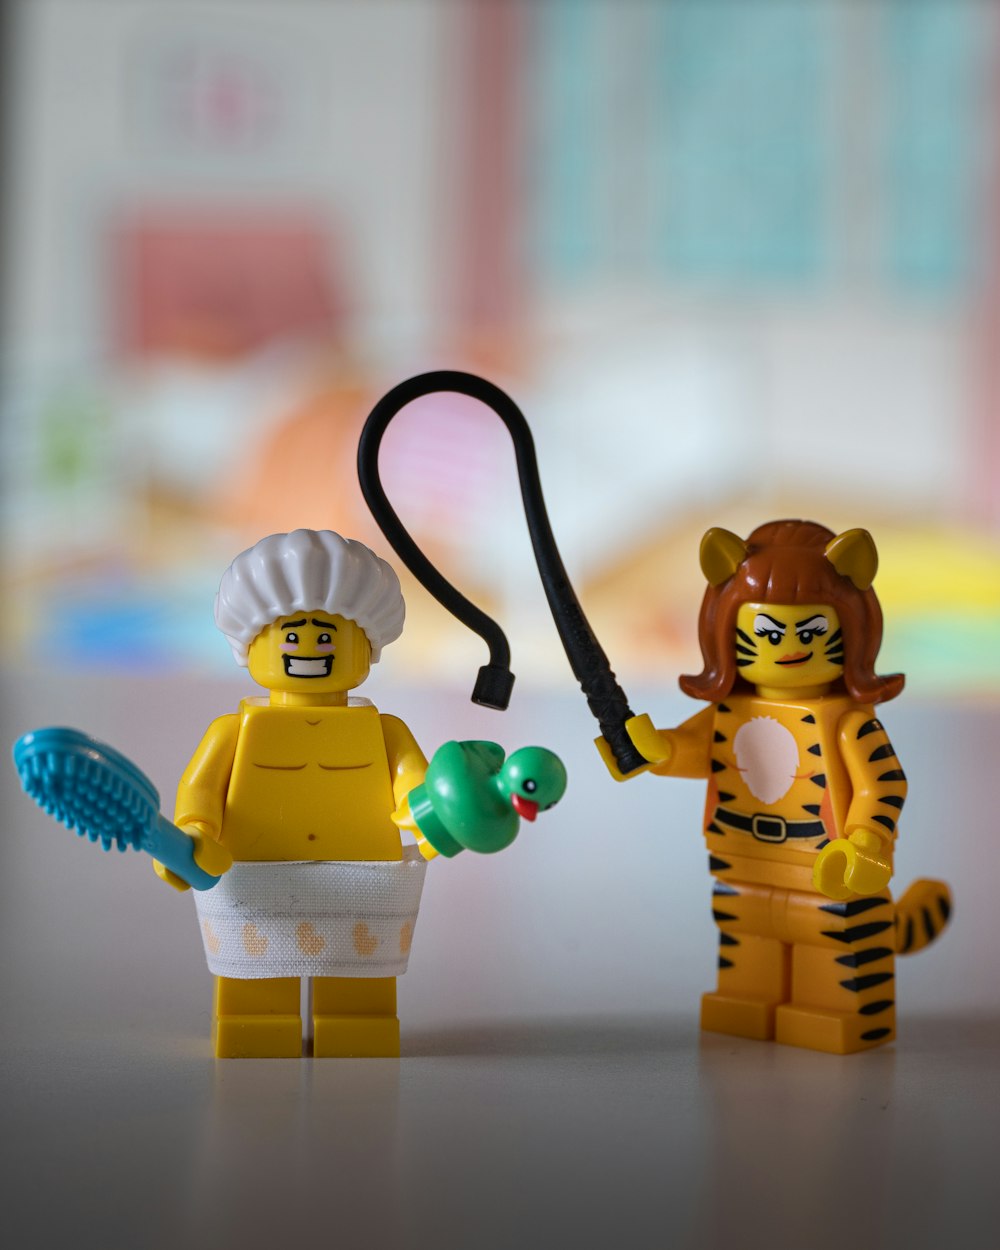 Minifig de Lego sosteniendo una manguera negra